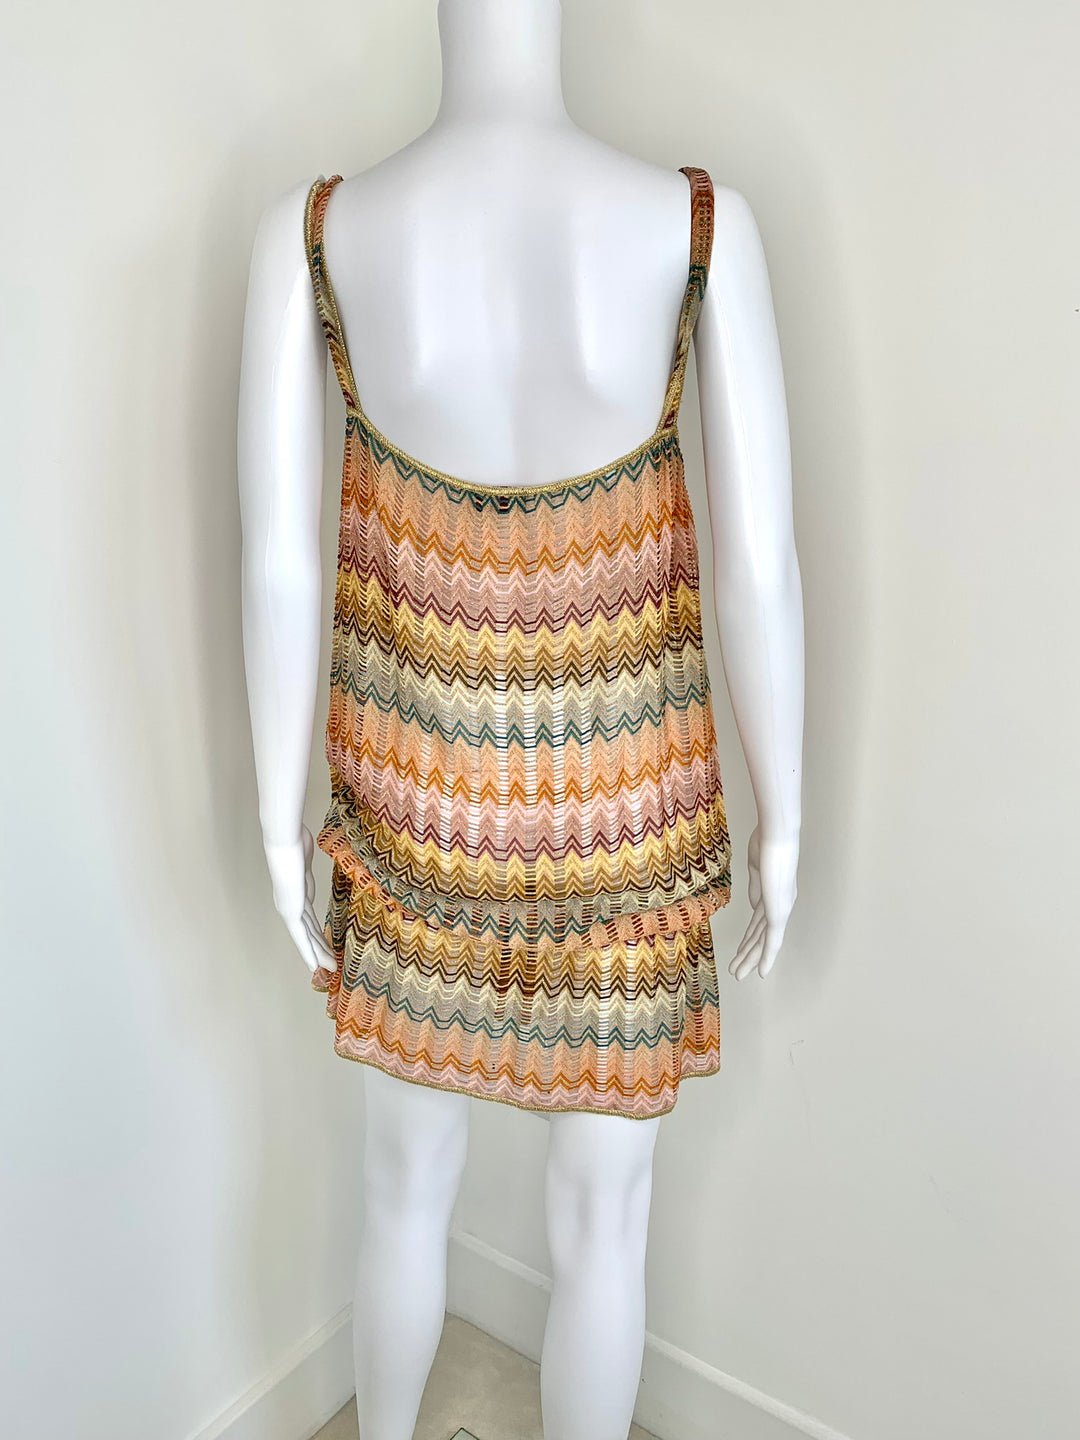 Missoni, Dress, 2008, Size UK 12